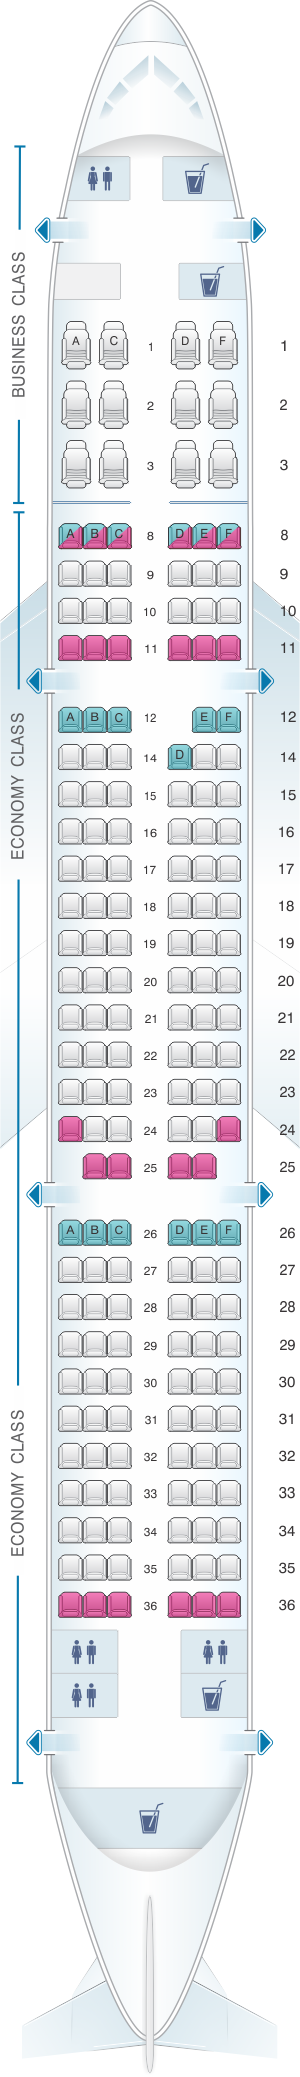 Seat map for Qatar Airways Airbus A321 200 177pax